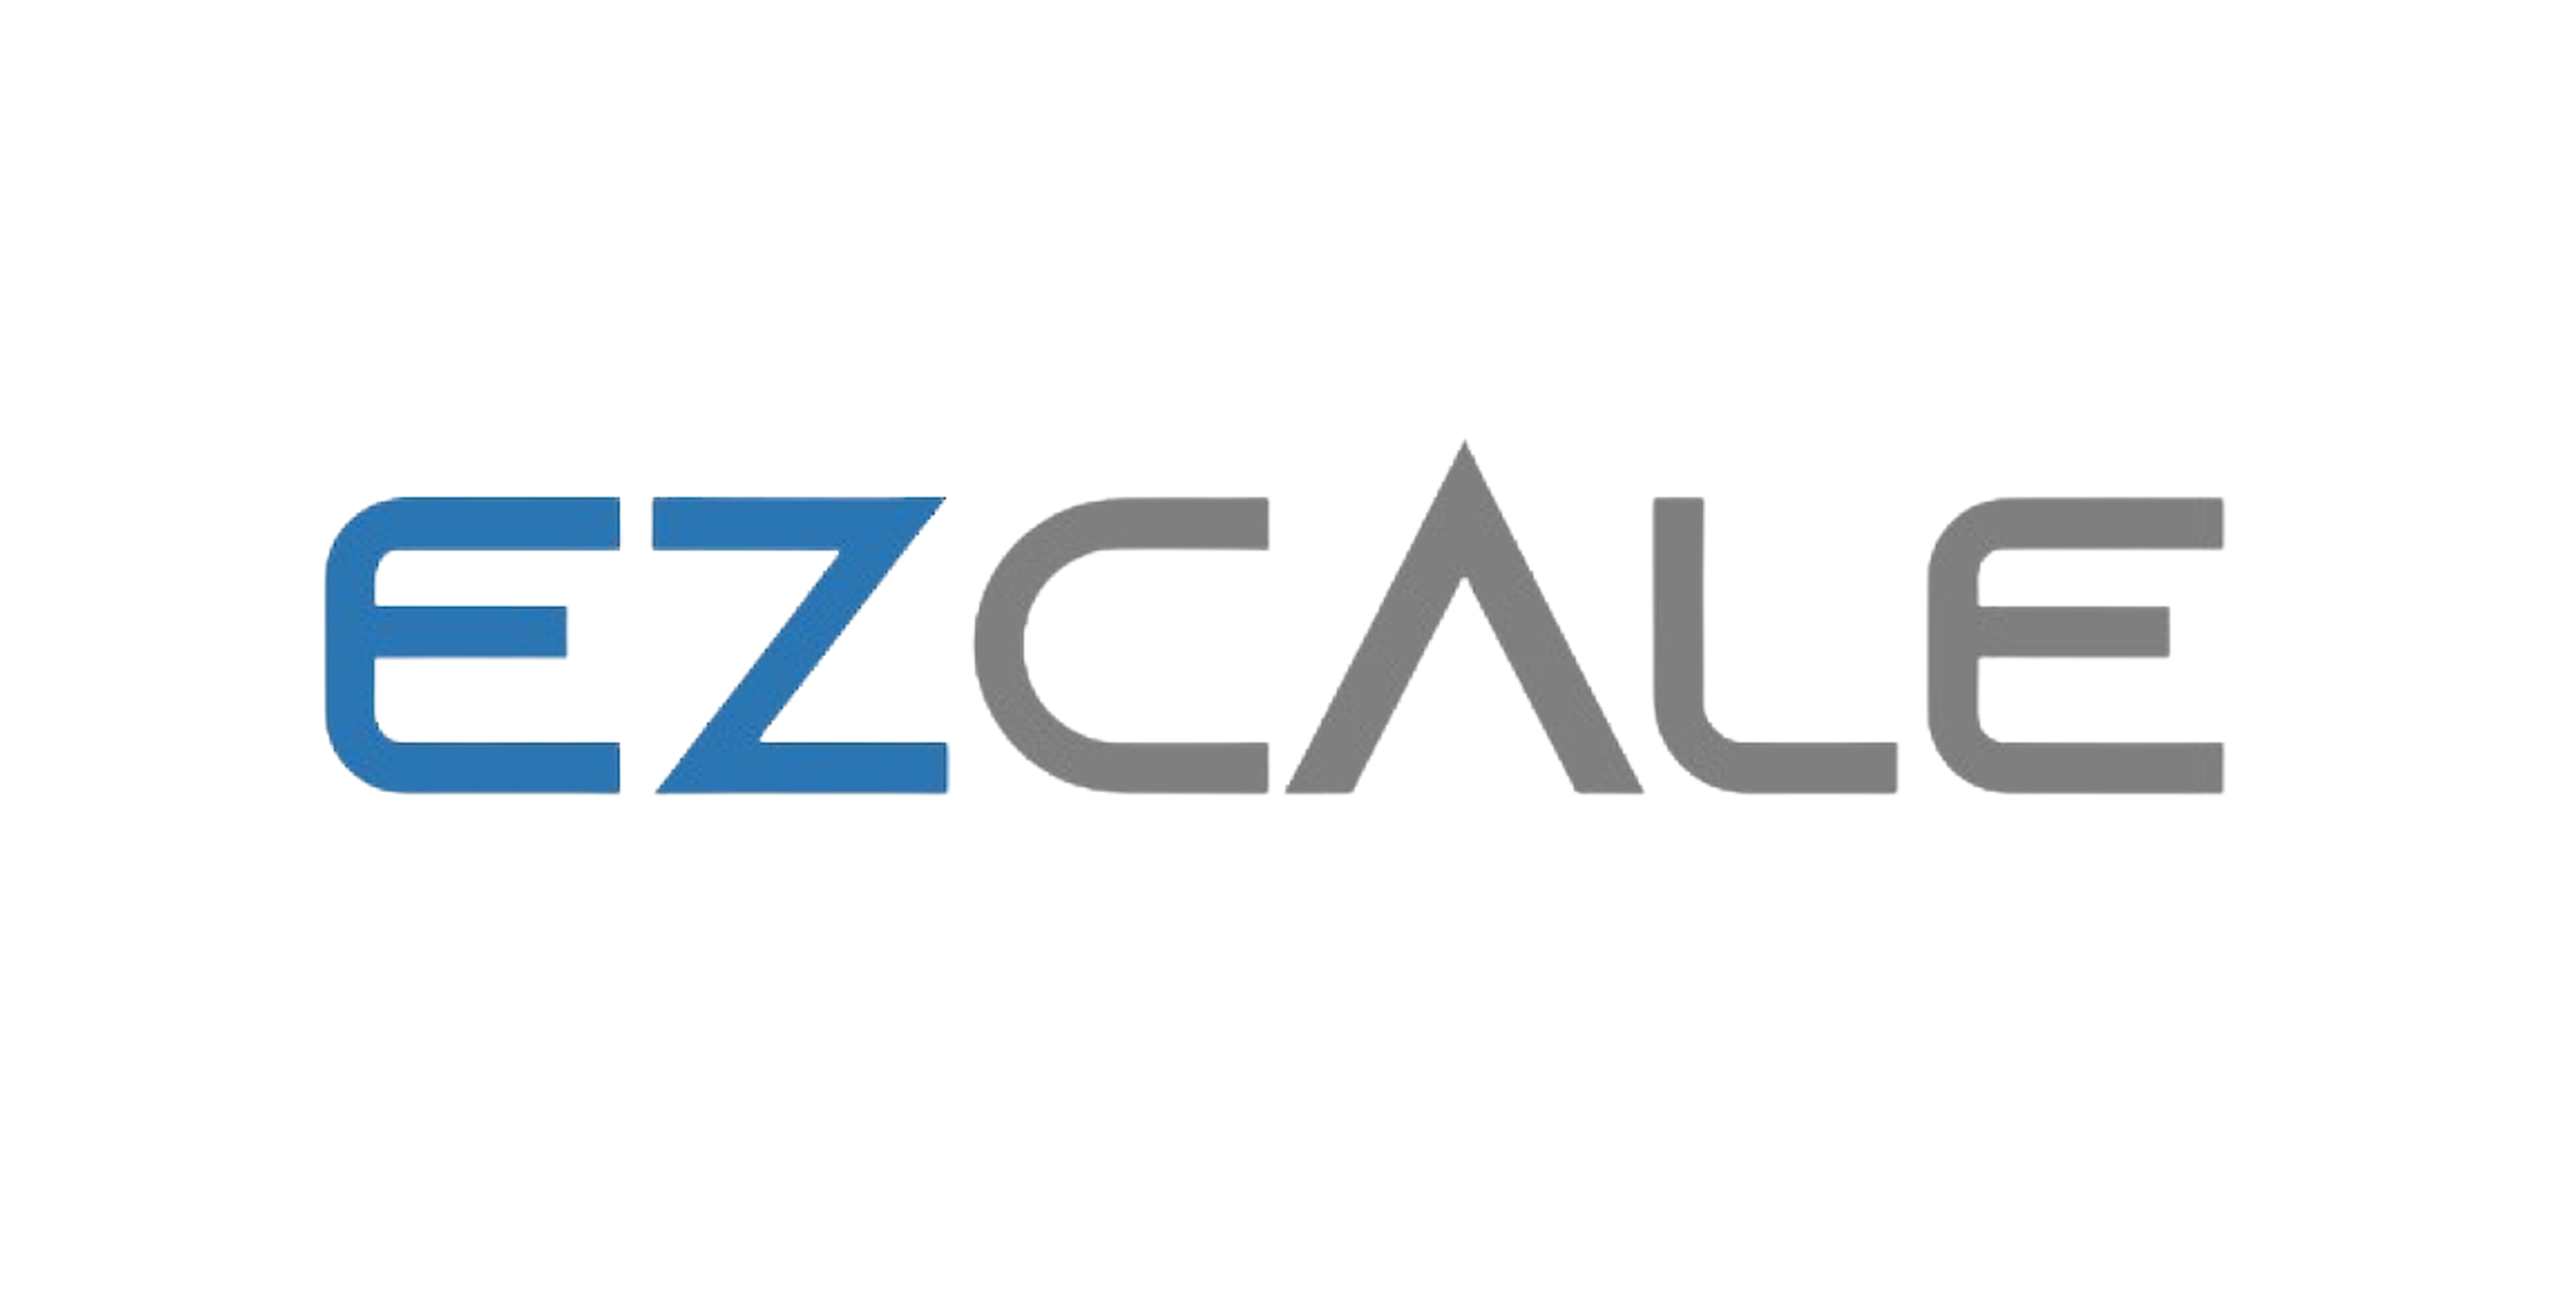 ezcale_logo